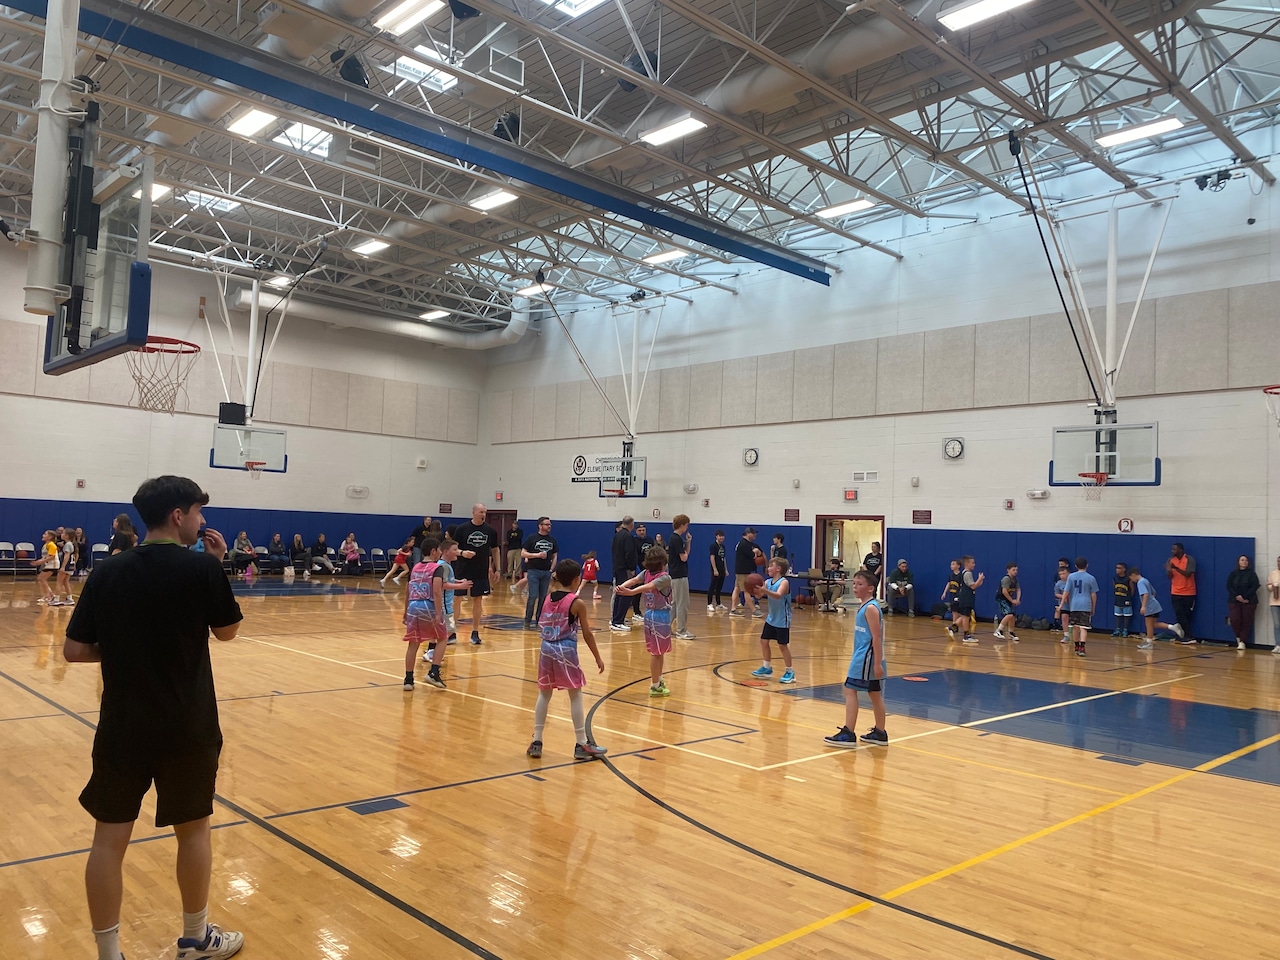 365 Central NY kids play basketball to raise money for St. Baldricks Foundation [Video]